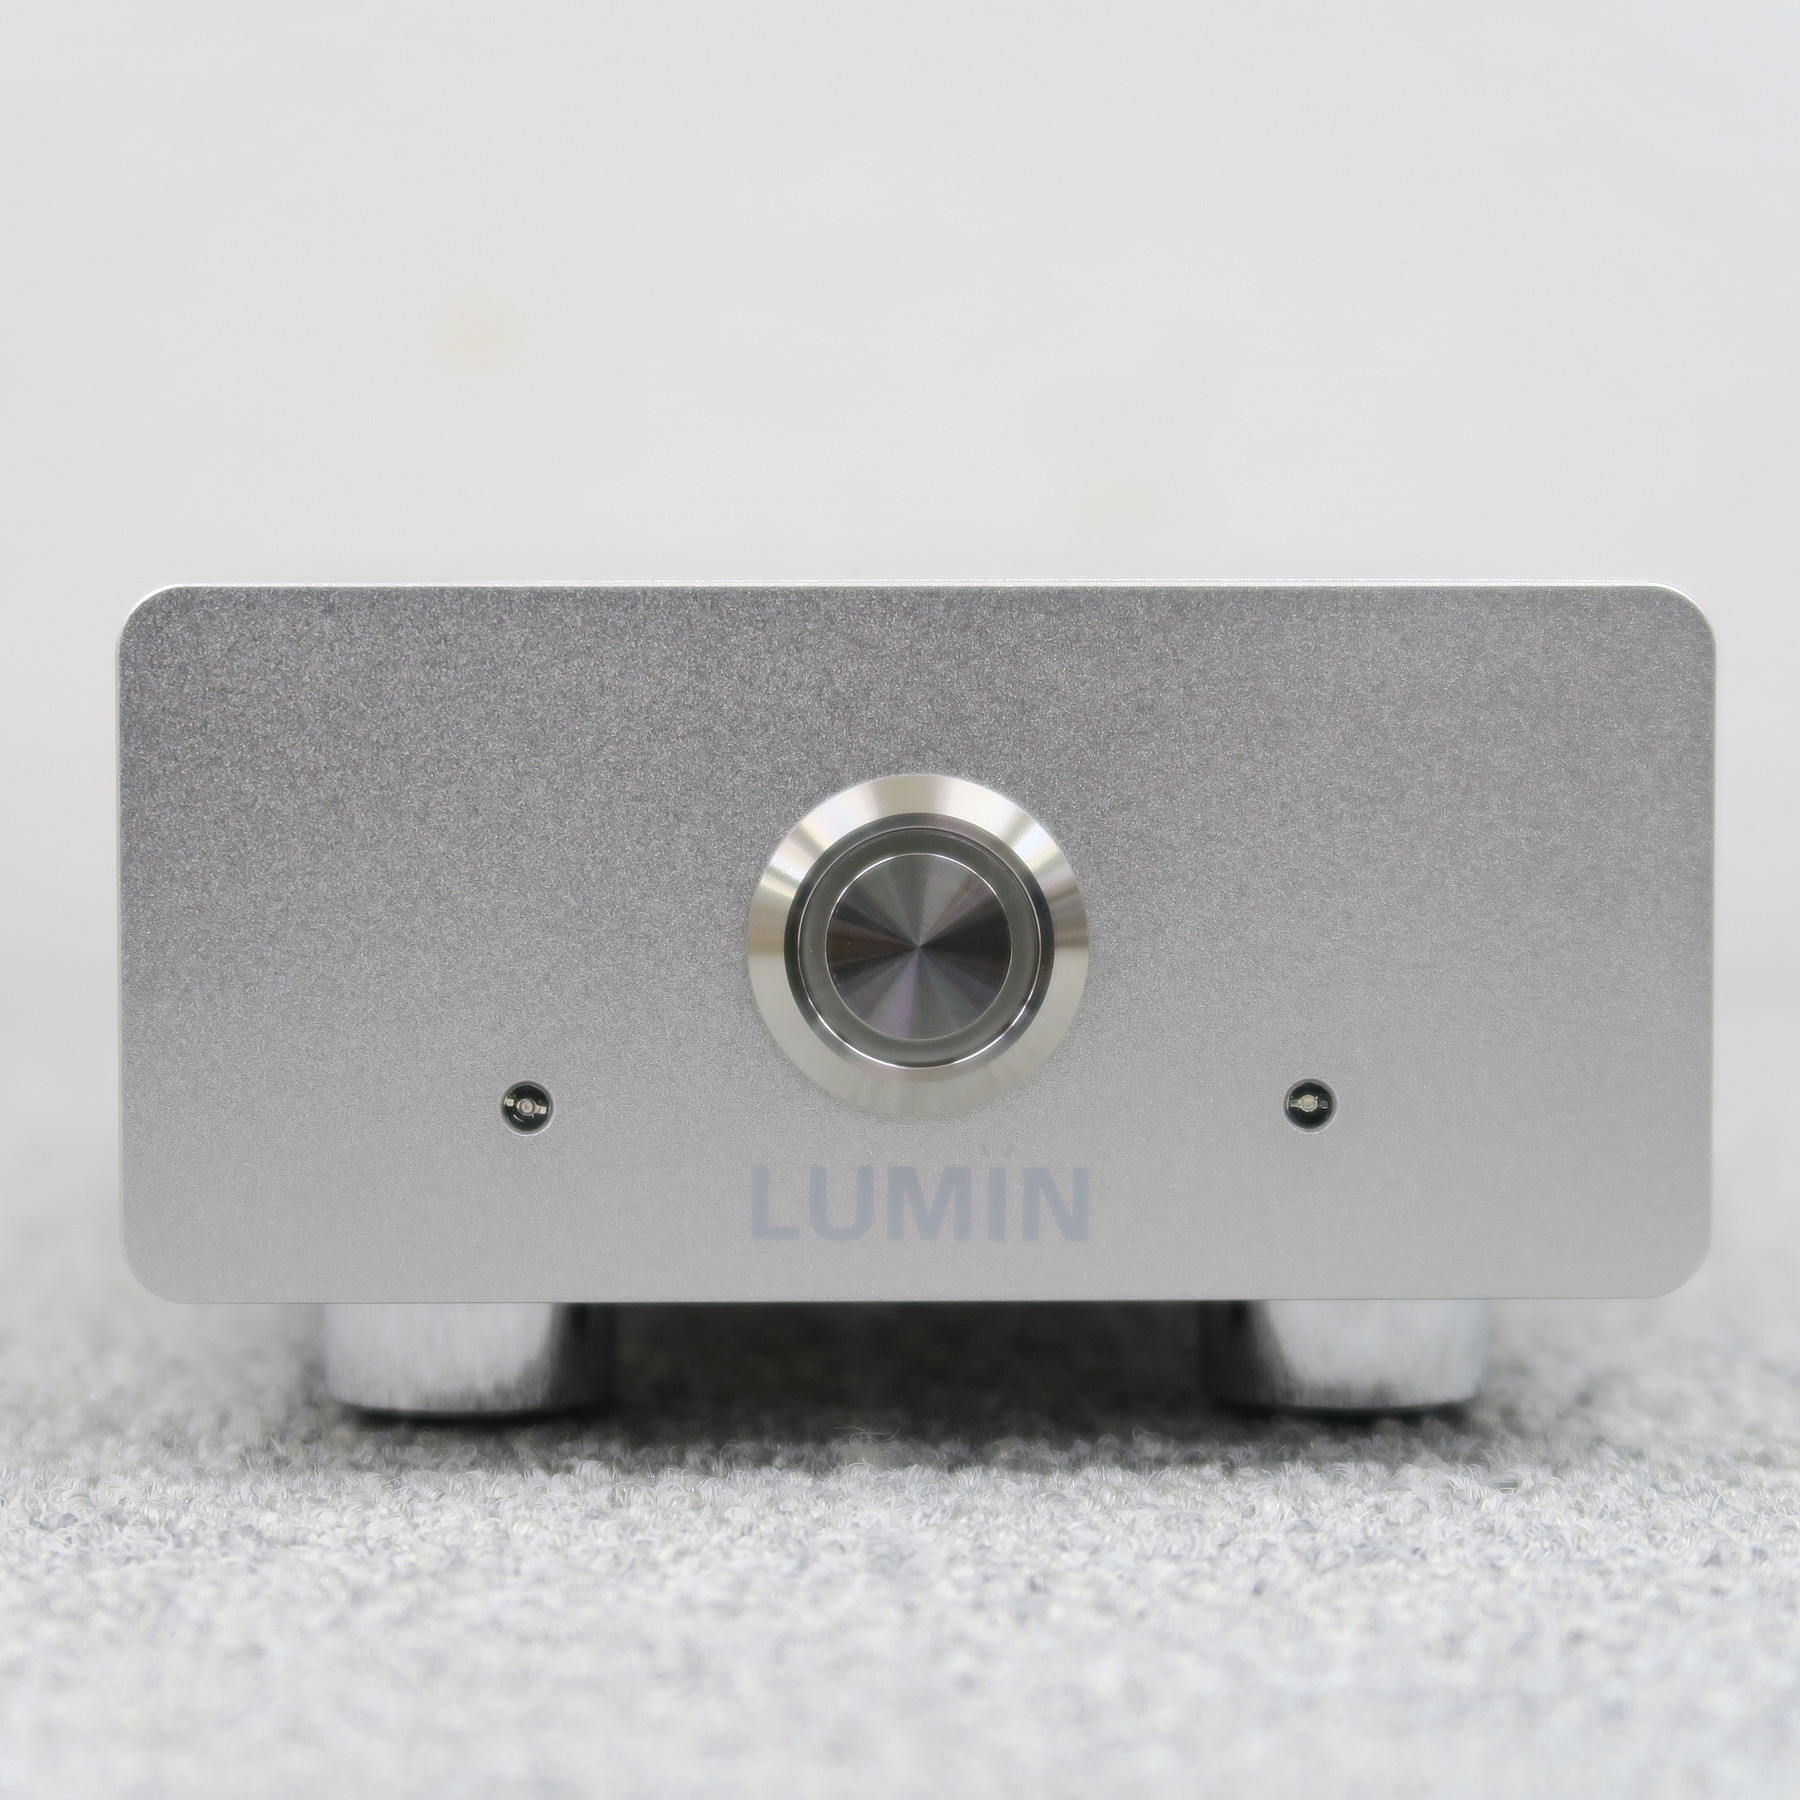 【Sランク】ルーミン LUMIN L1 5TB ネットワークプレーヤー【元箱】@52024 / 中古オーディオ買取、販売、通販のショップアフロ